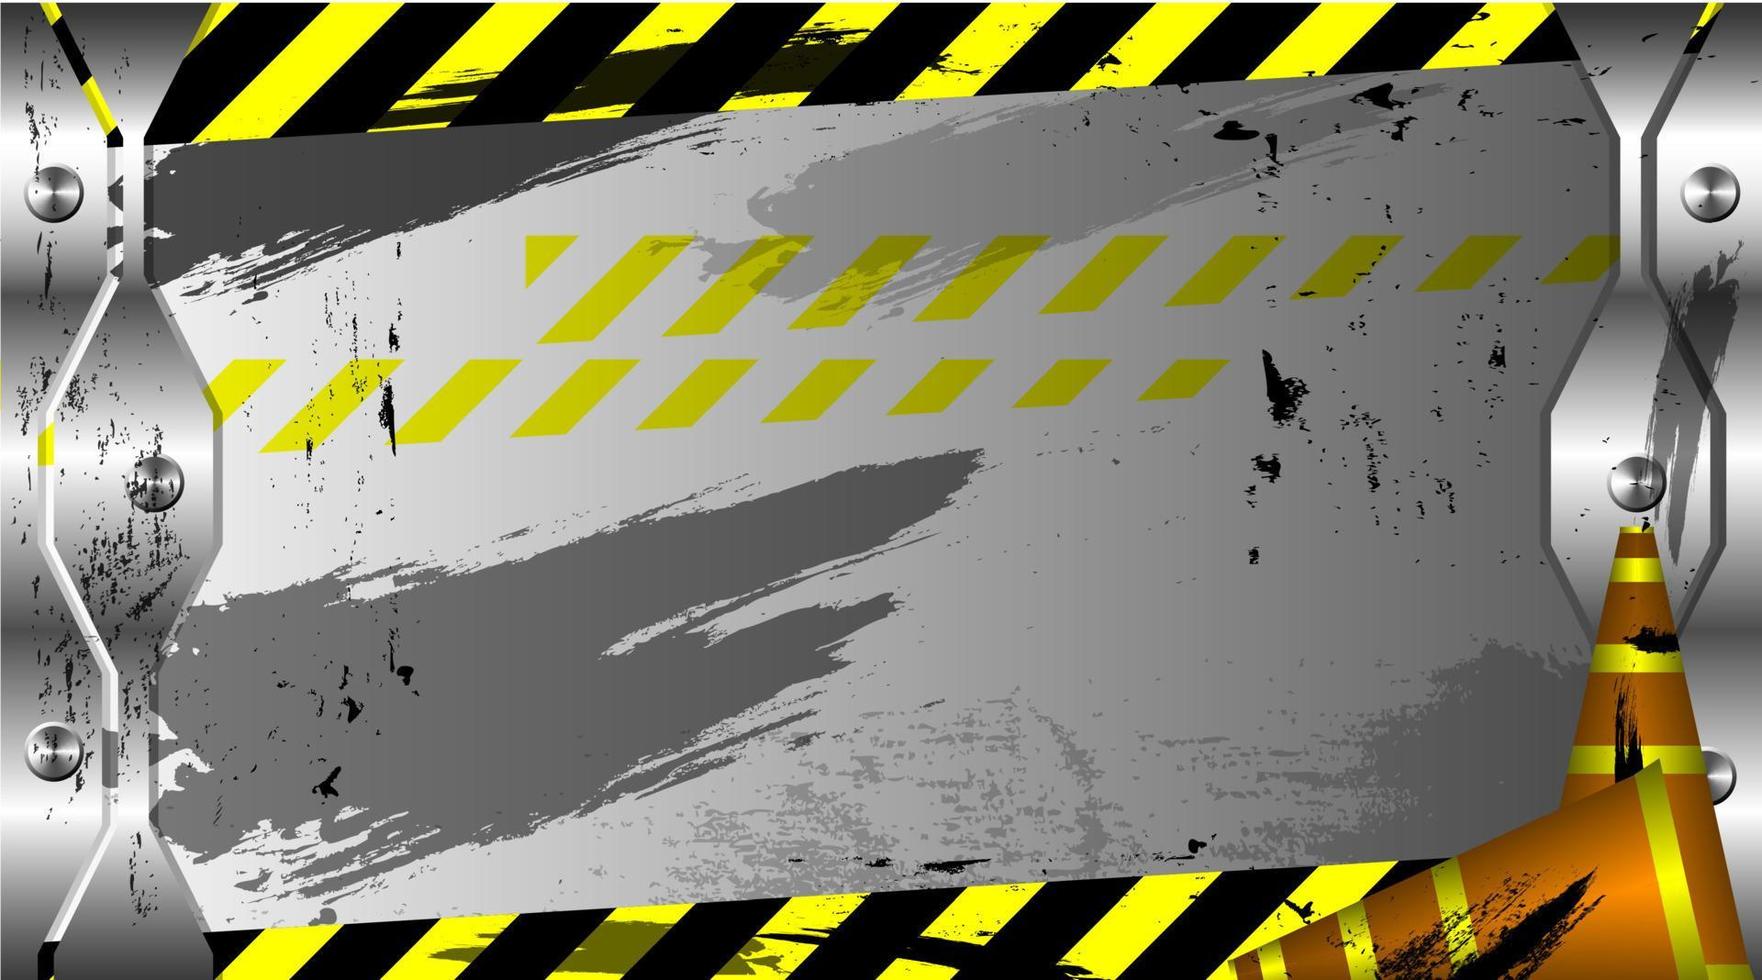 presentación de diapositivas de banner web con tema de construcción de carreteras de asfalto. Advertencia de líneas de seguridad. efectos de asfaltado rociado. vector